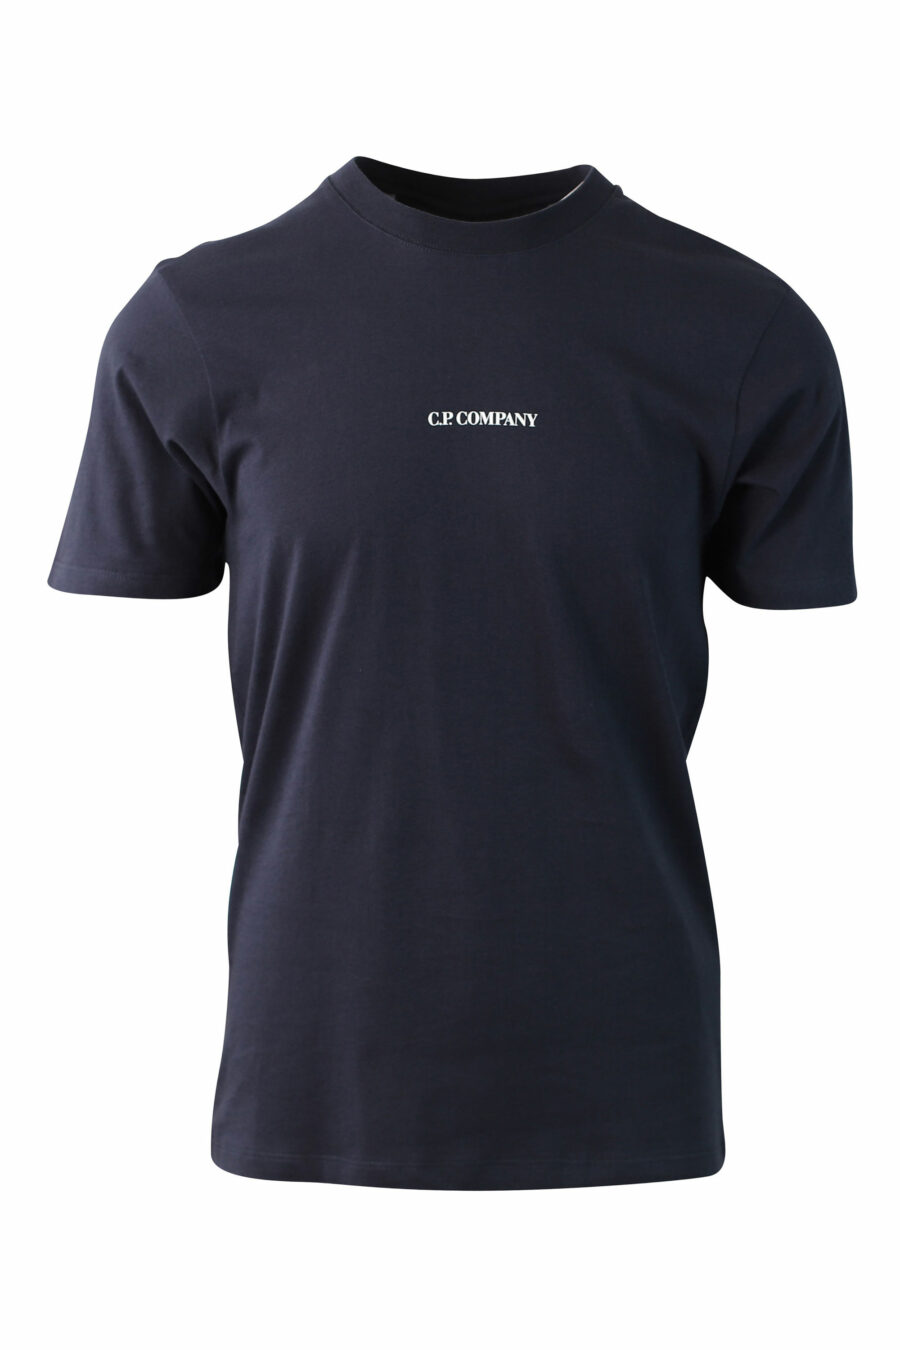 Dunkelblaues T-Shirt mit zentralem Minilogo - IMG 0018 1